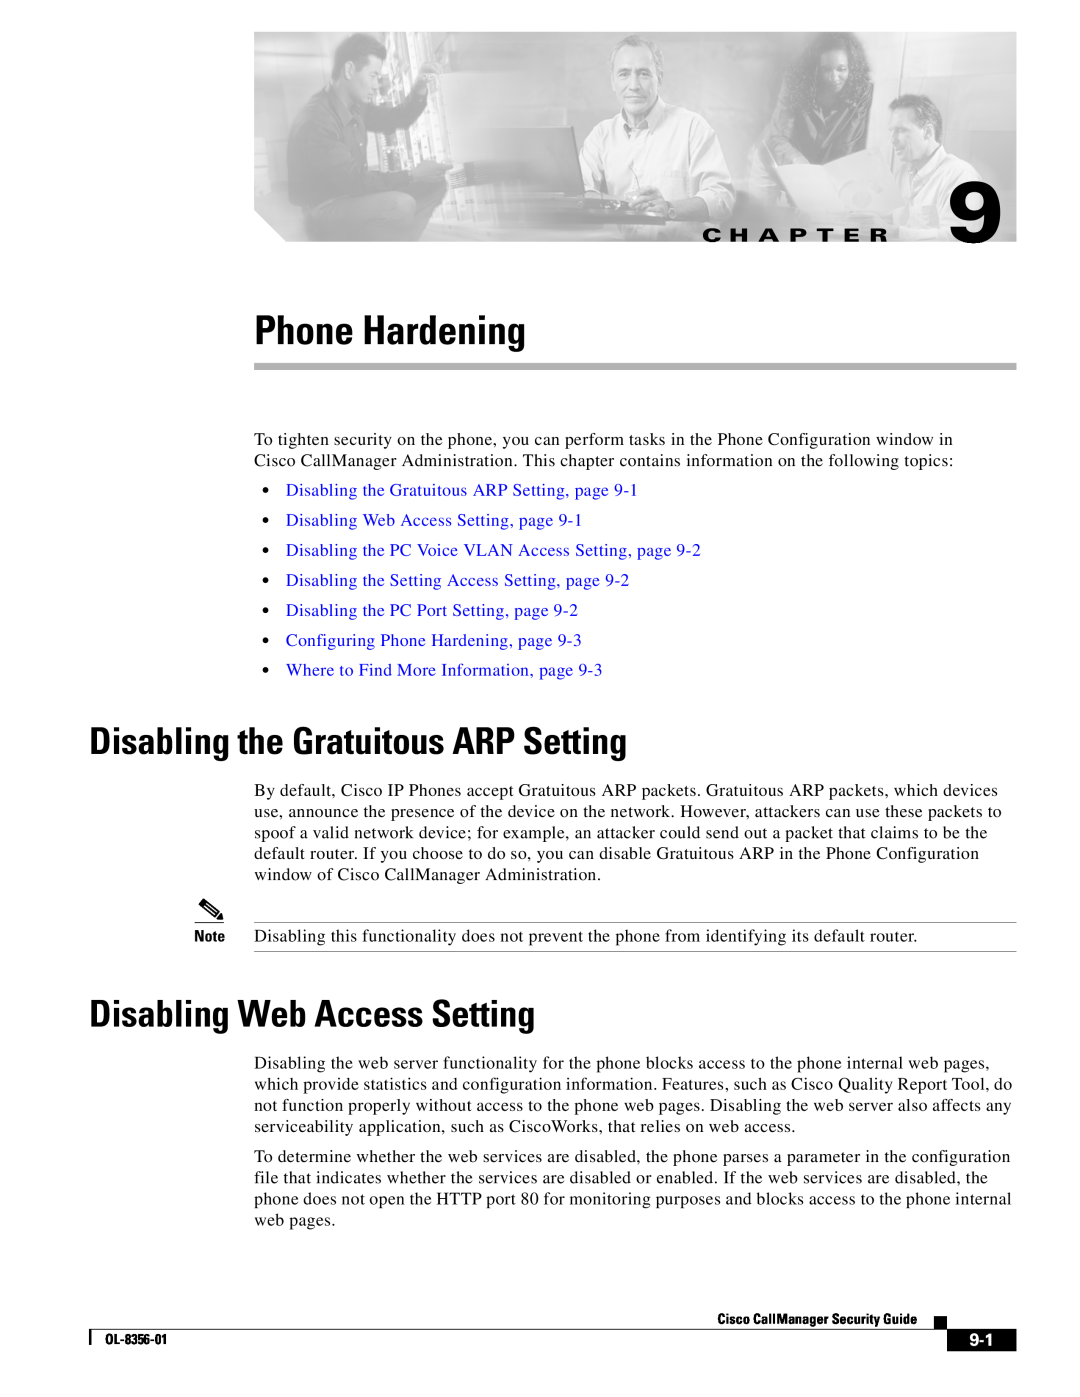 Cisco Systems OL-8356-01 manual Disabling the Gratuitous ARP Setting, Disabling Web Access Setting, Phone Hardening 